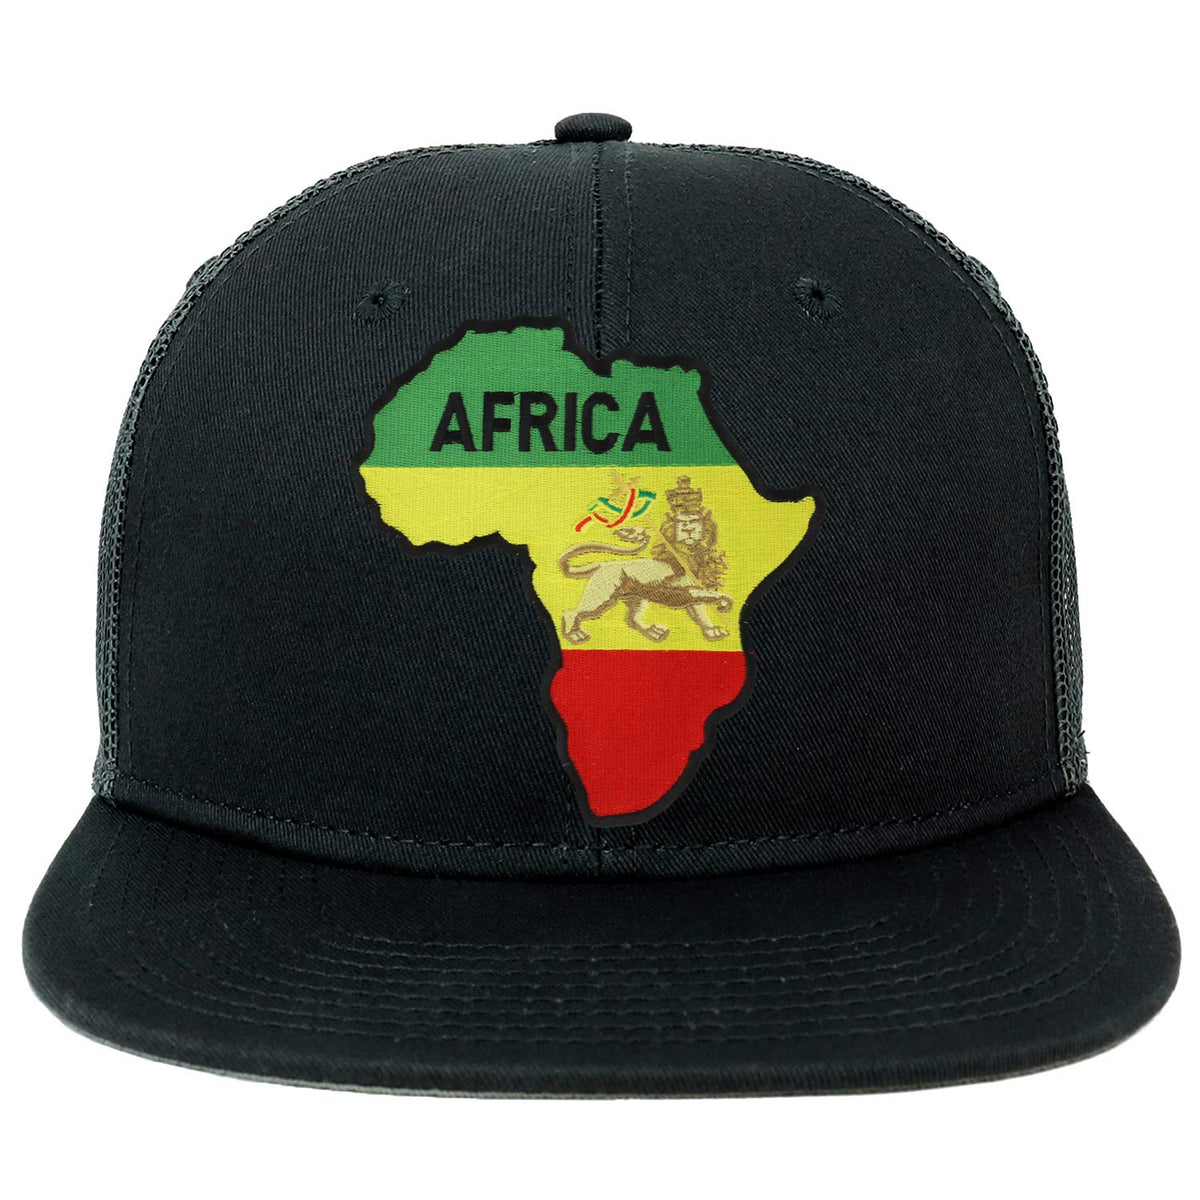 Armycrew Oversize XXL RGY Africa Map and Rasta Lion Patch Flatbill Mesh Snapback Cap - Black - 2XL